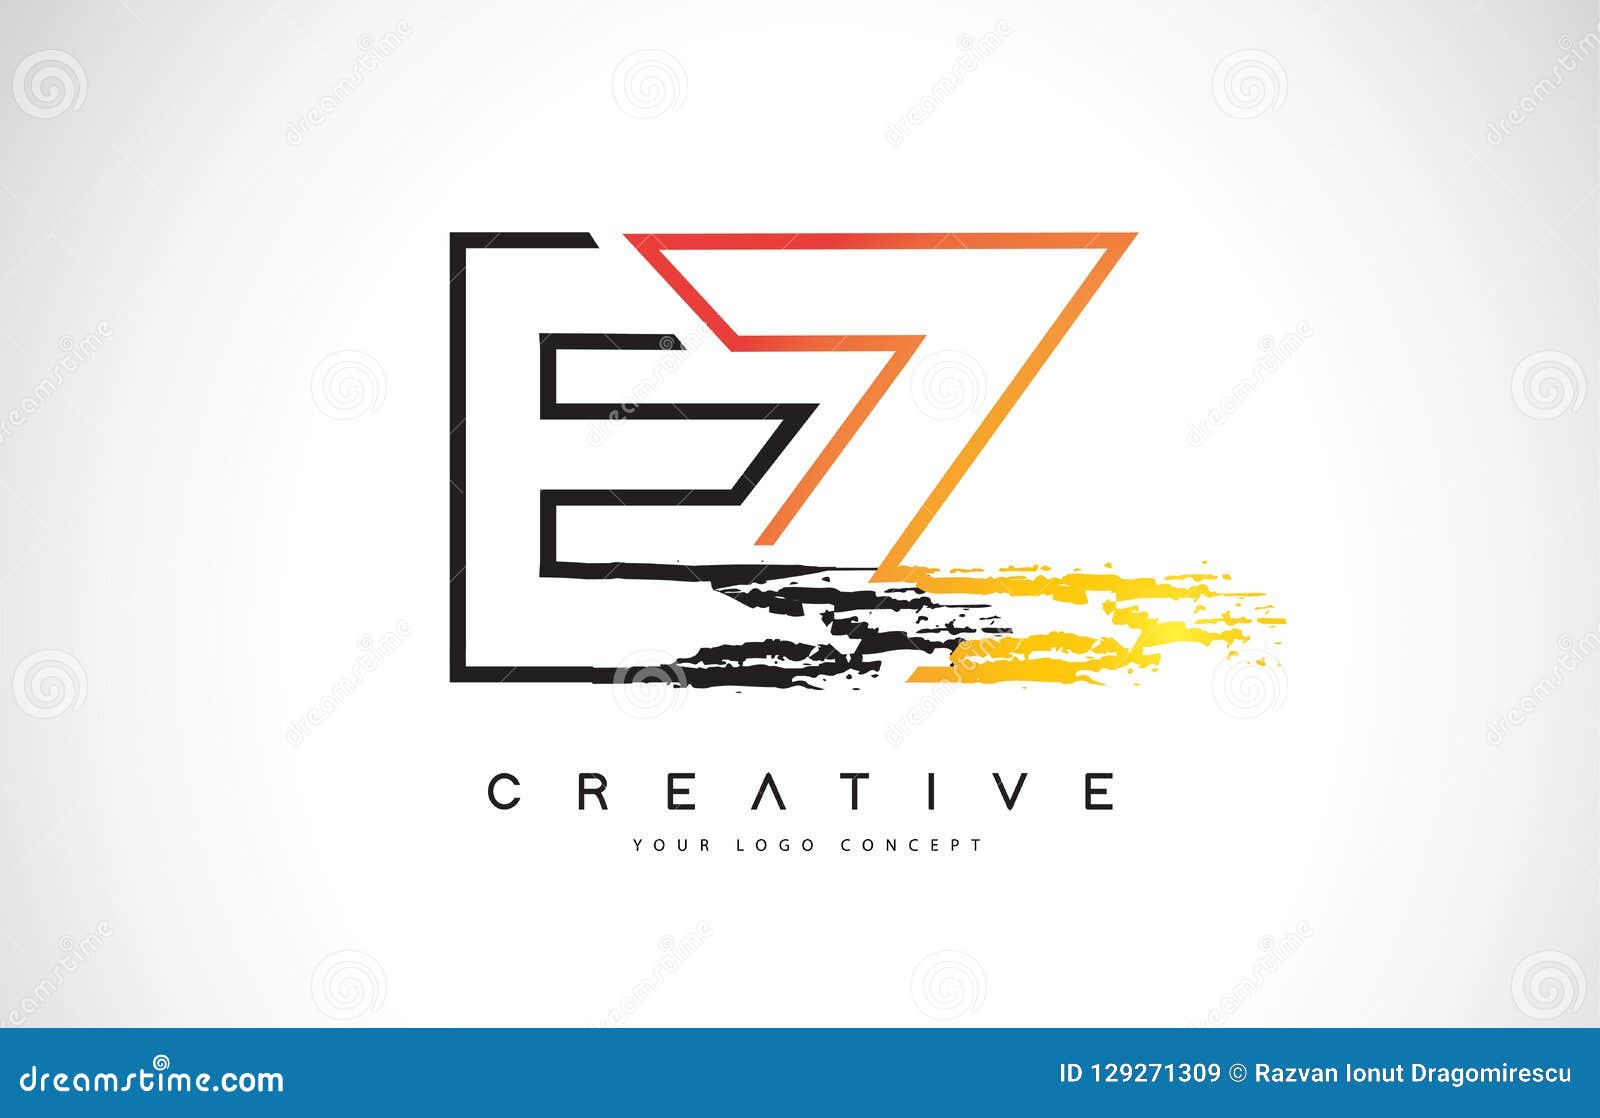 EZ Creative Modern Logo Design with Orange and Black Colors. Mon Stock